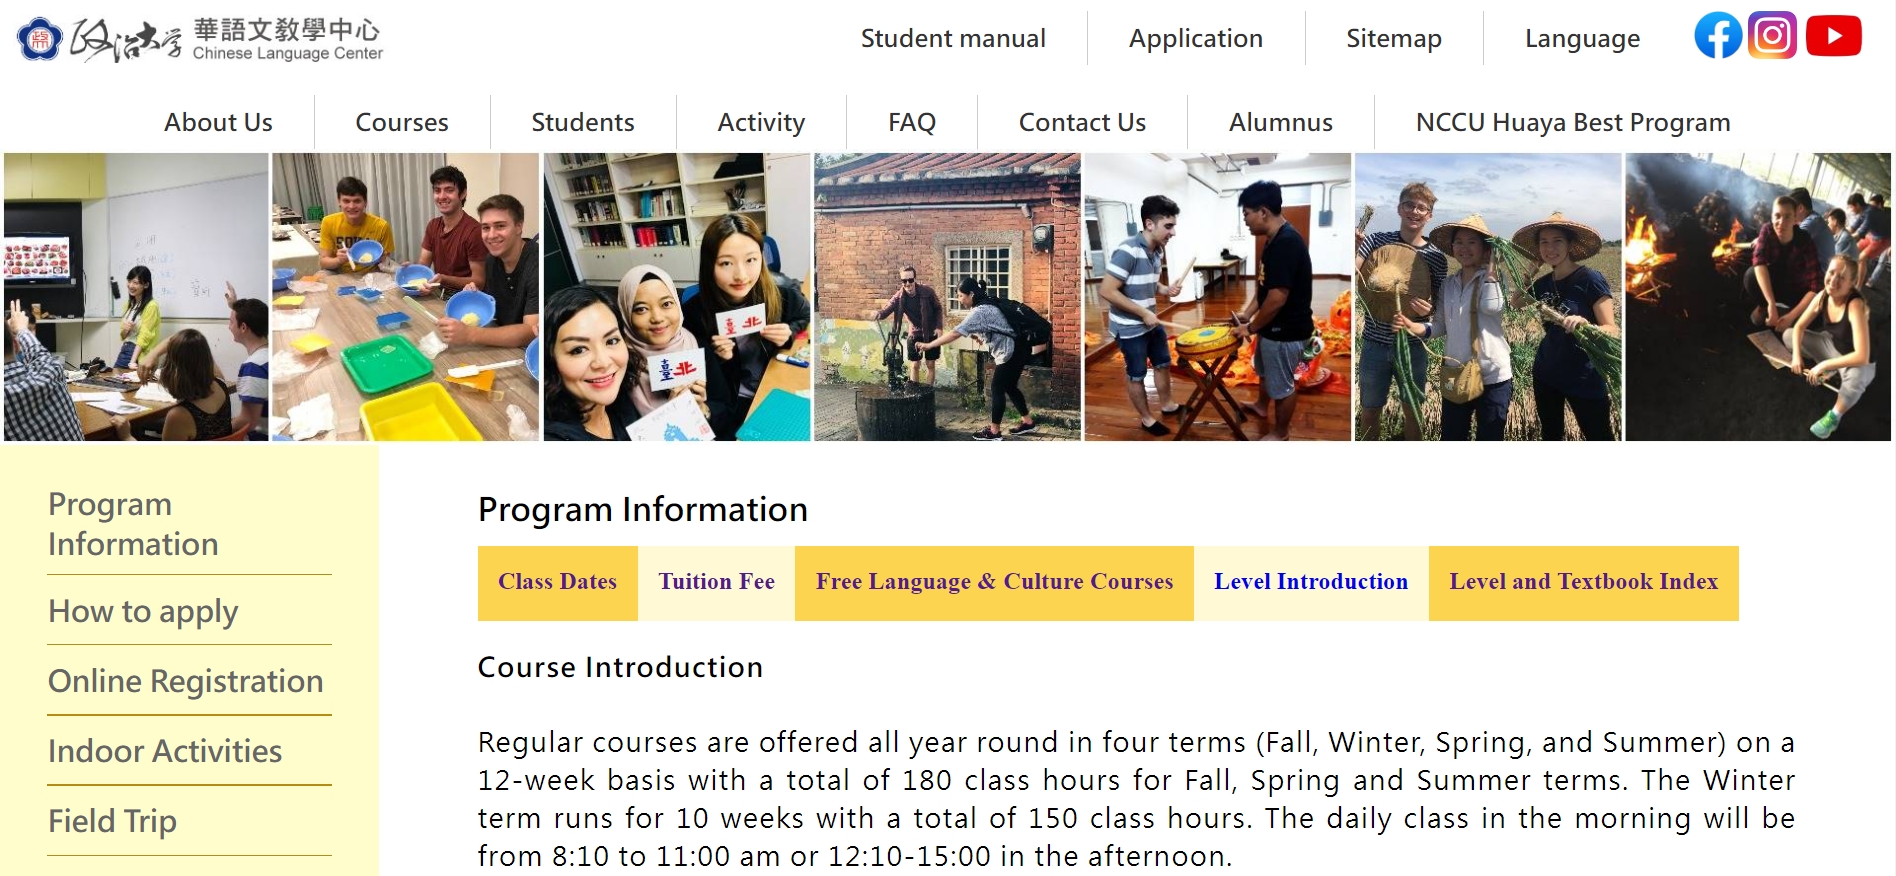 【2022.12.16】 Chinese Course information — Chinese Language Center, National Chengchi University